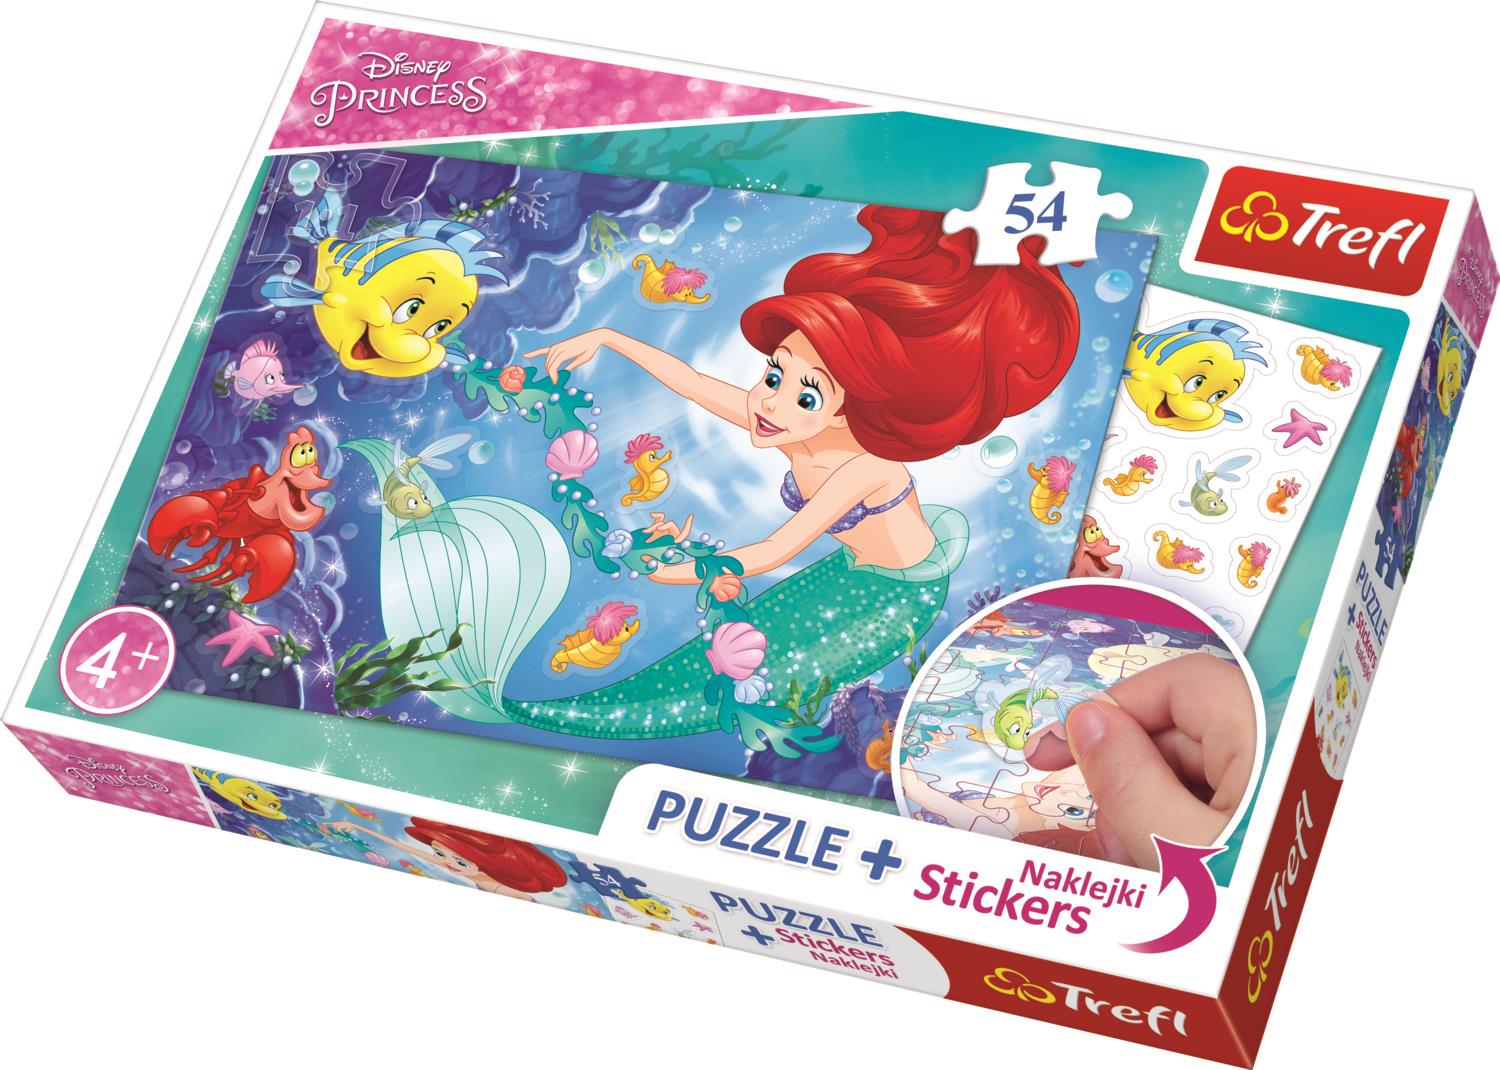 Trefl Çocuk Puzzle 75114 Princess, Disney 54 Parça + Stickers Puzzle